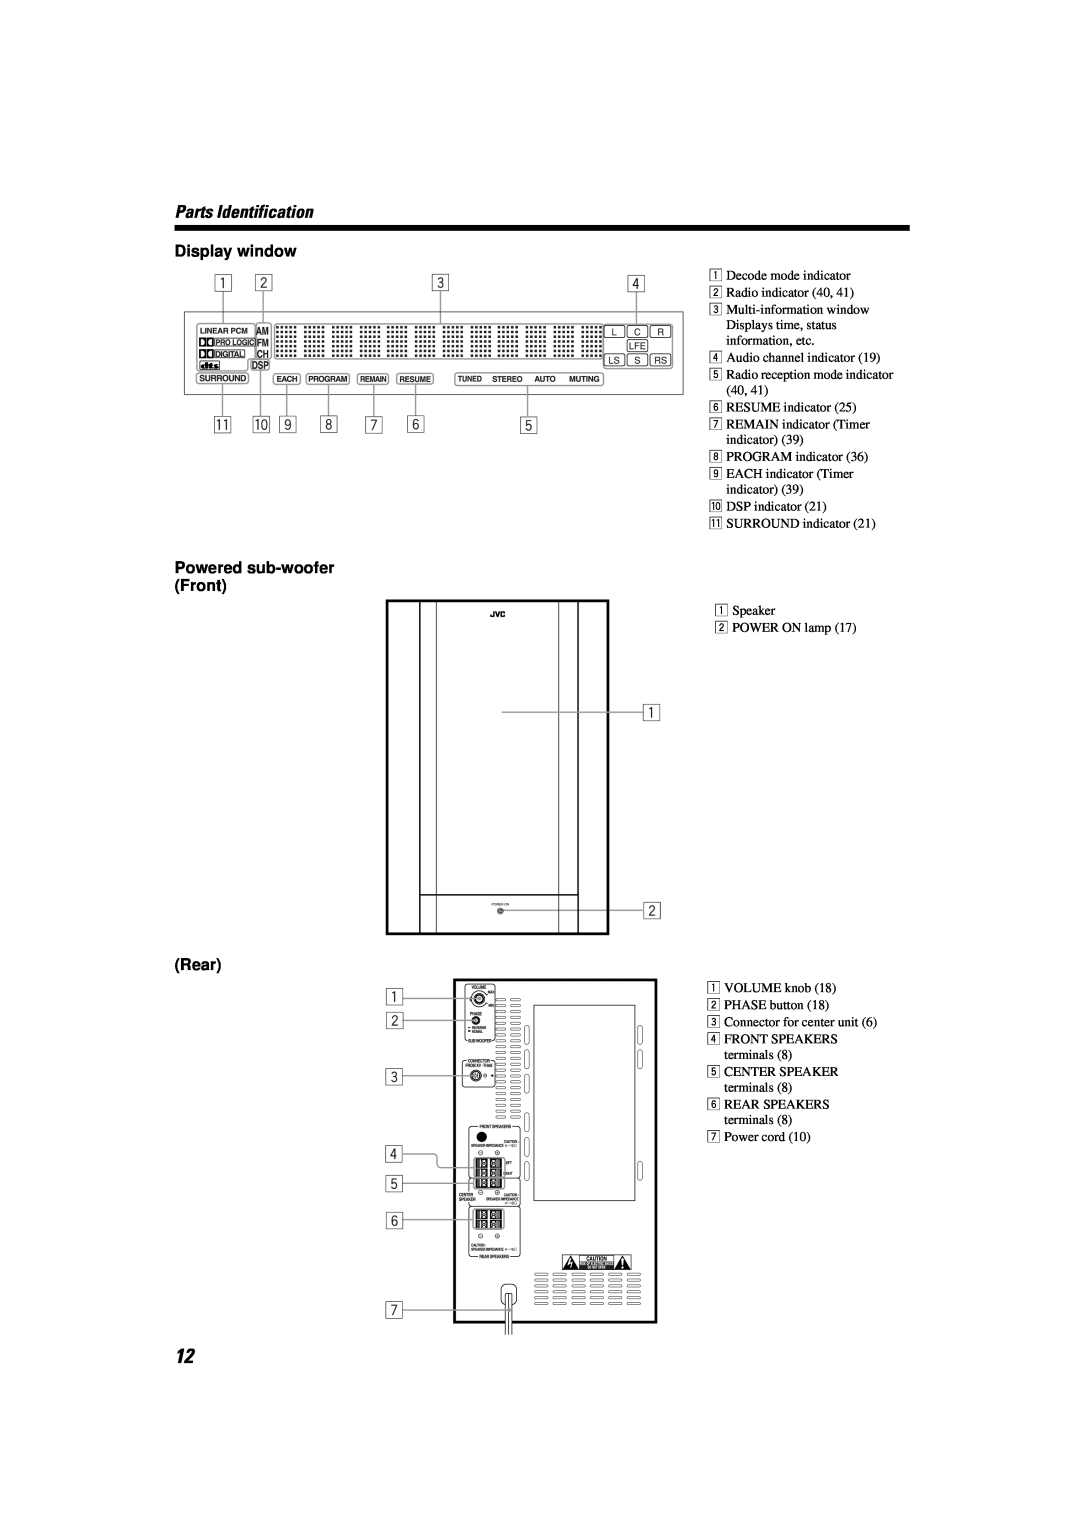 JVC TH-A9 manual Parts Identification, Display window Powered sub-wooferFront Rear, English 